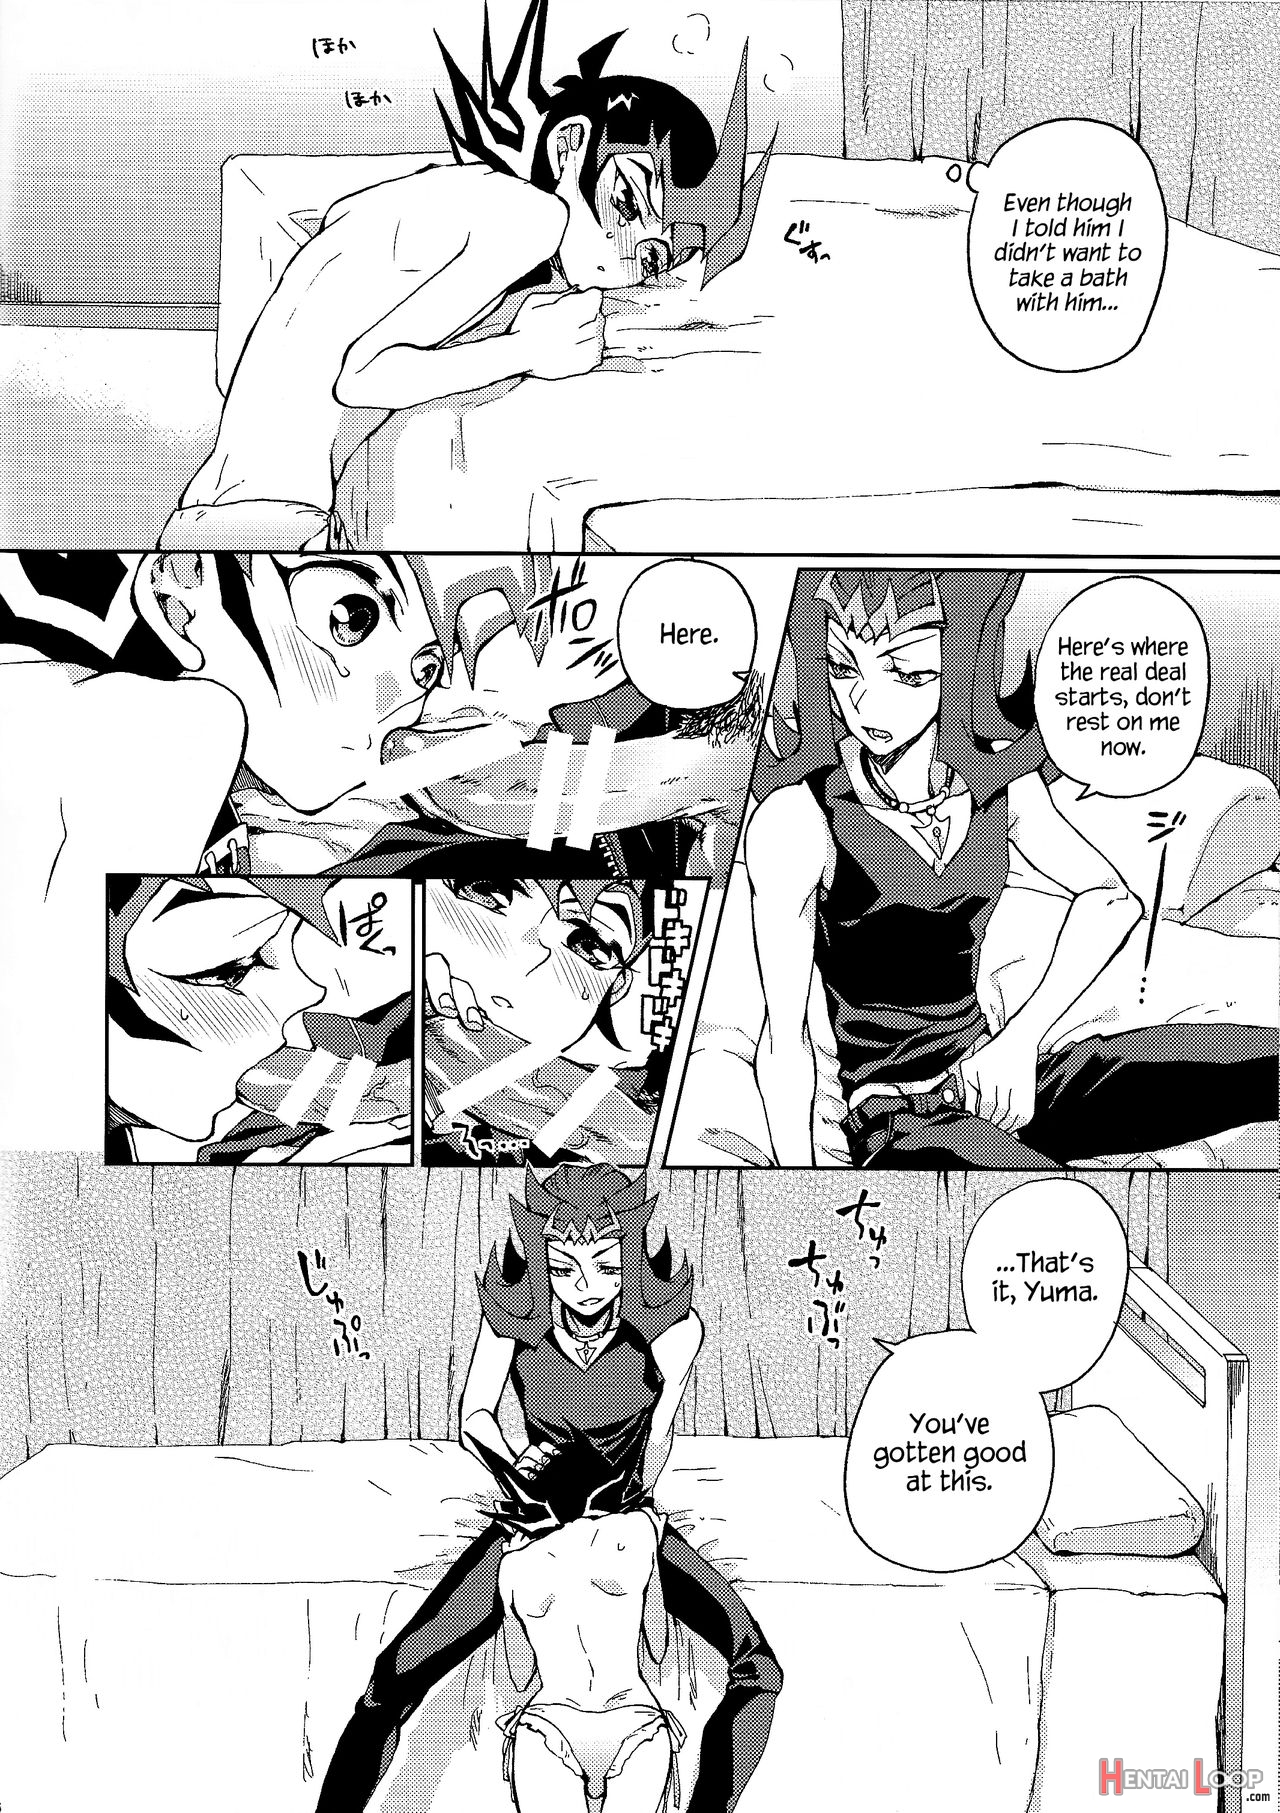 Kaiinu Yuma page 6